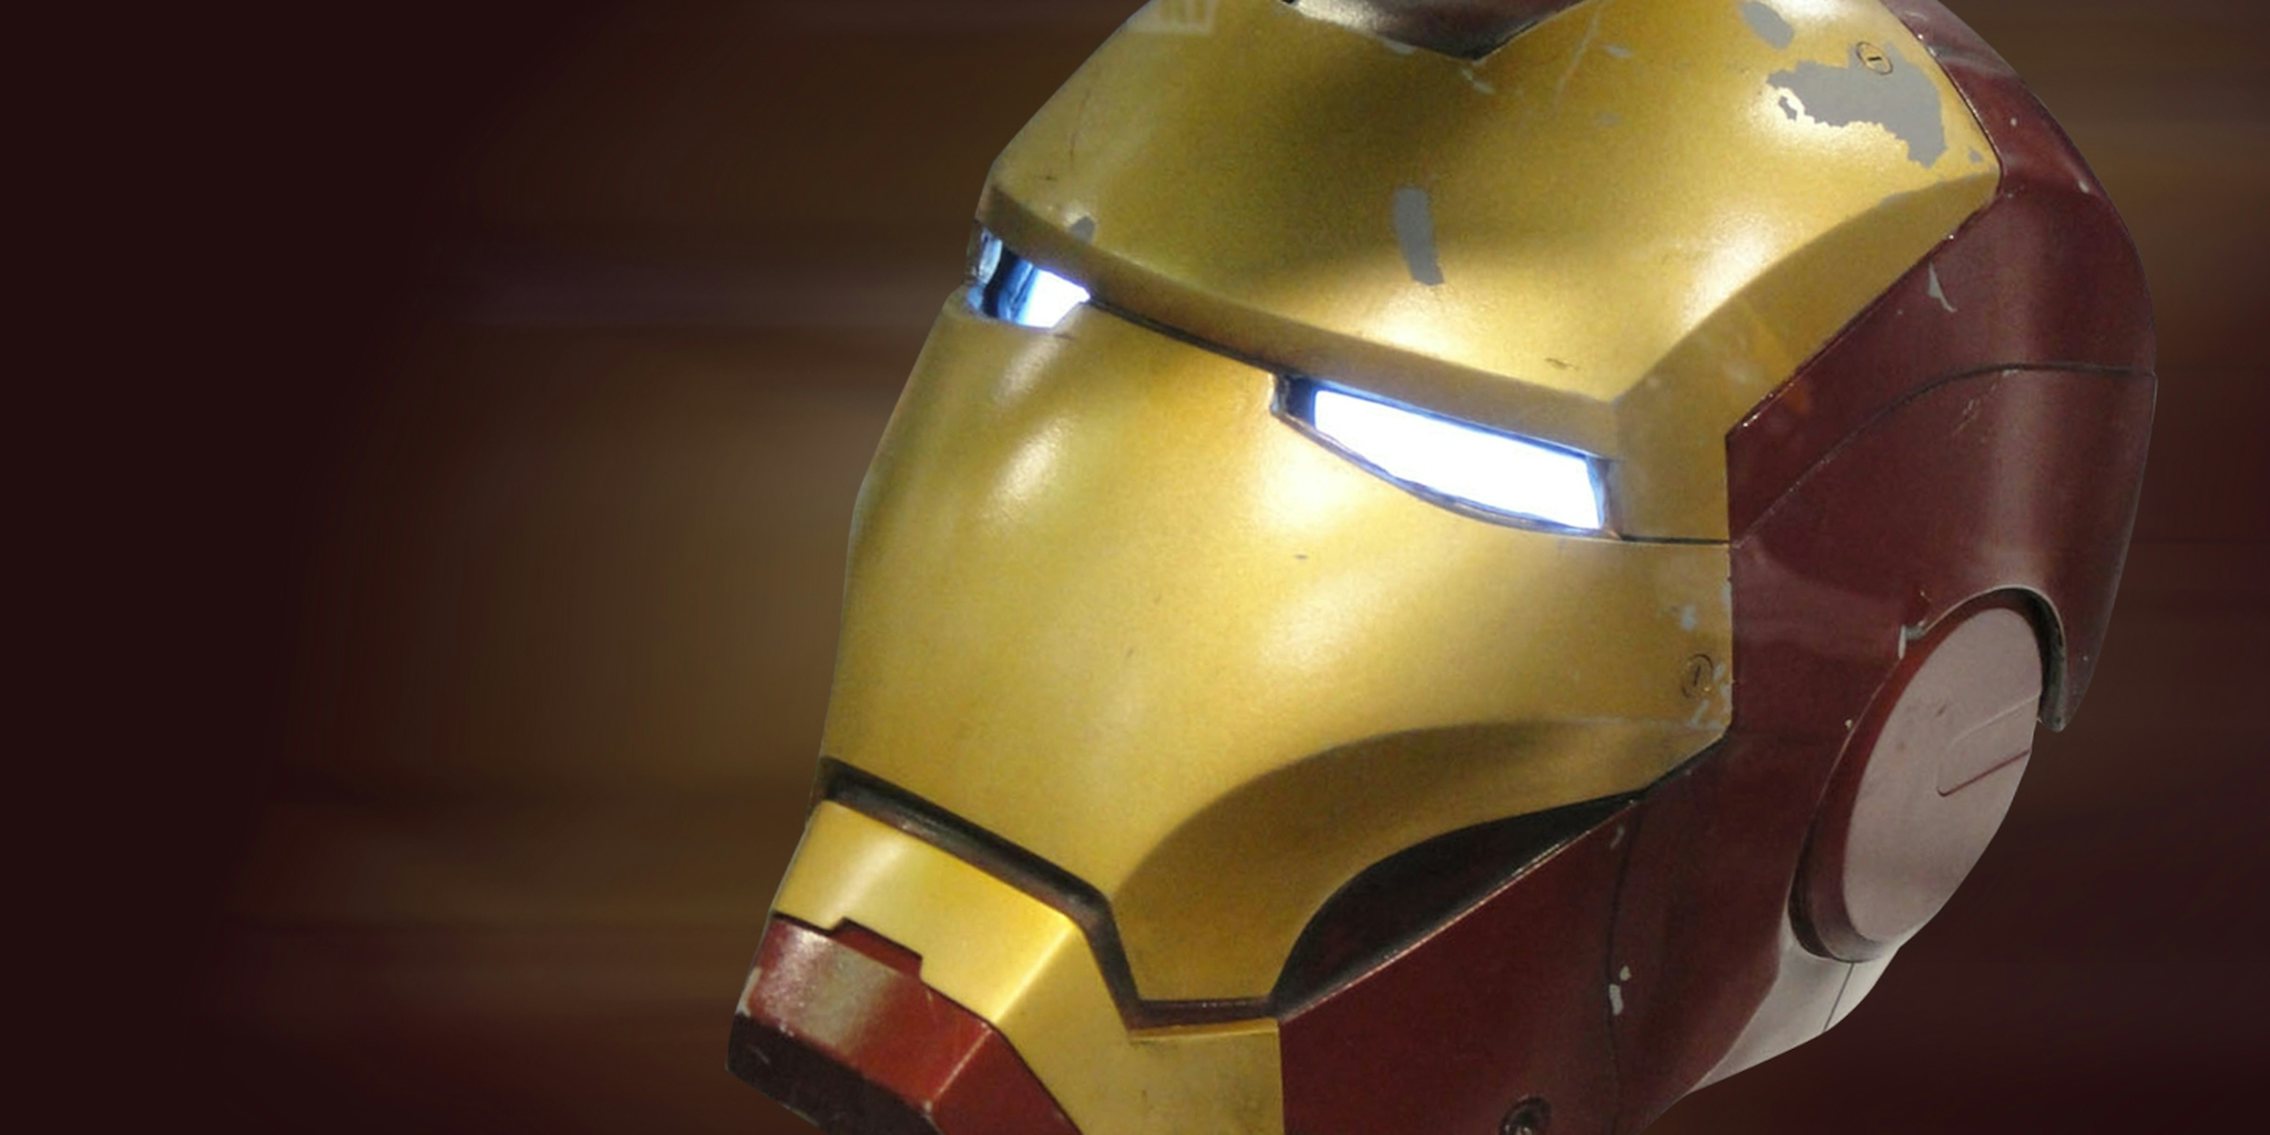 Robert Downey Jr. says Iron Man 4 is happening